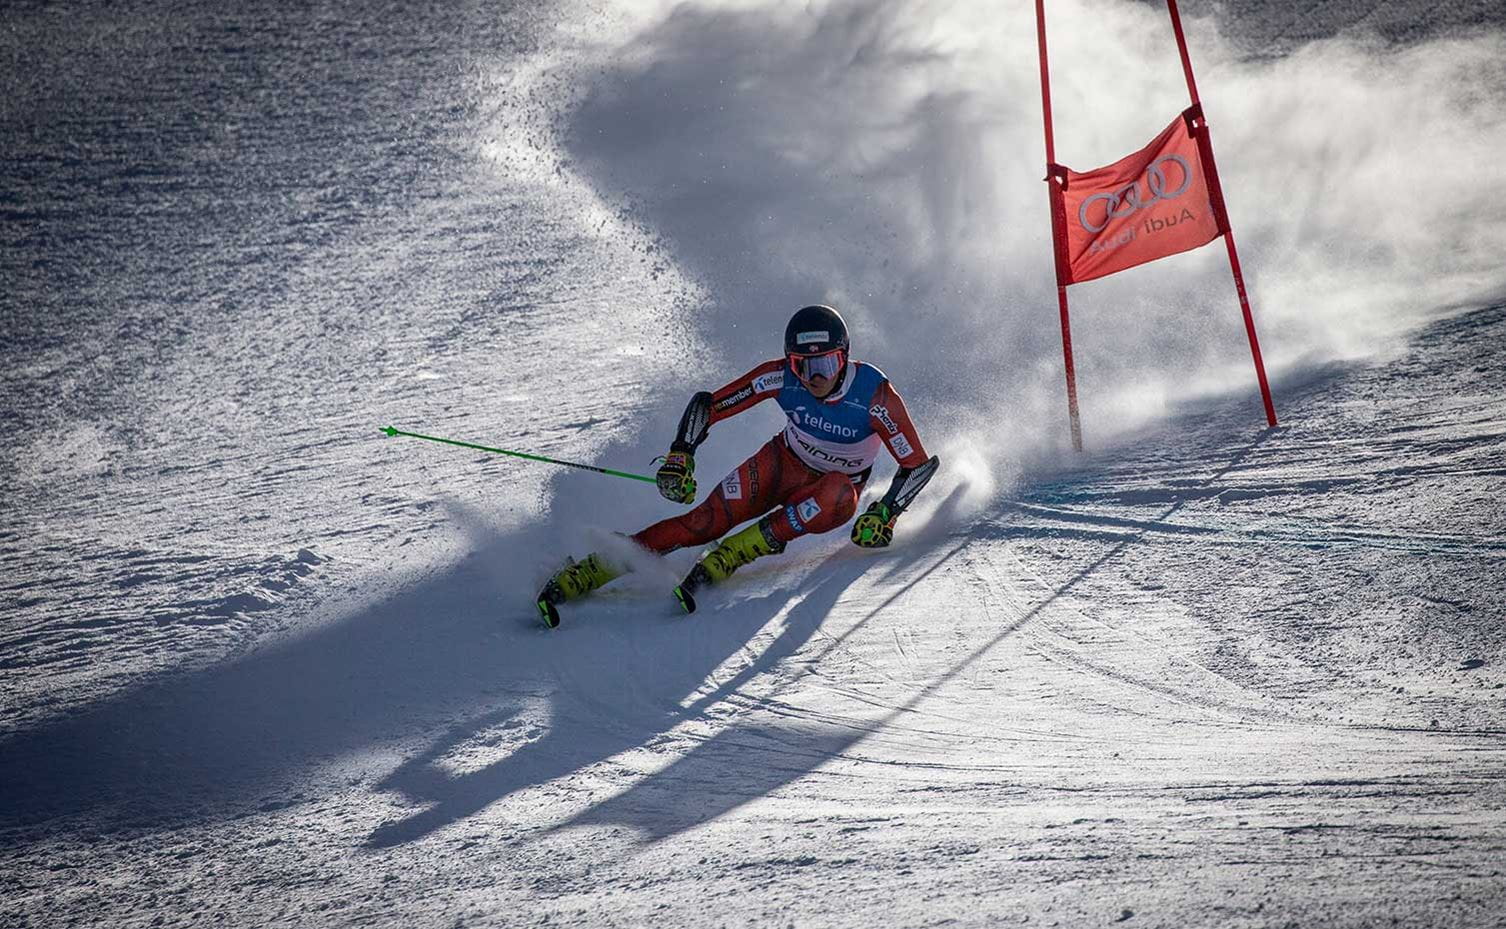 Ski racer at Aspen Mountain